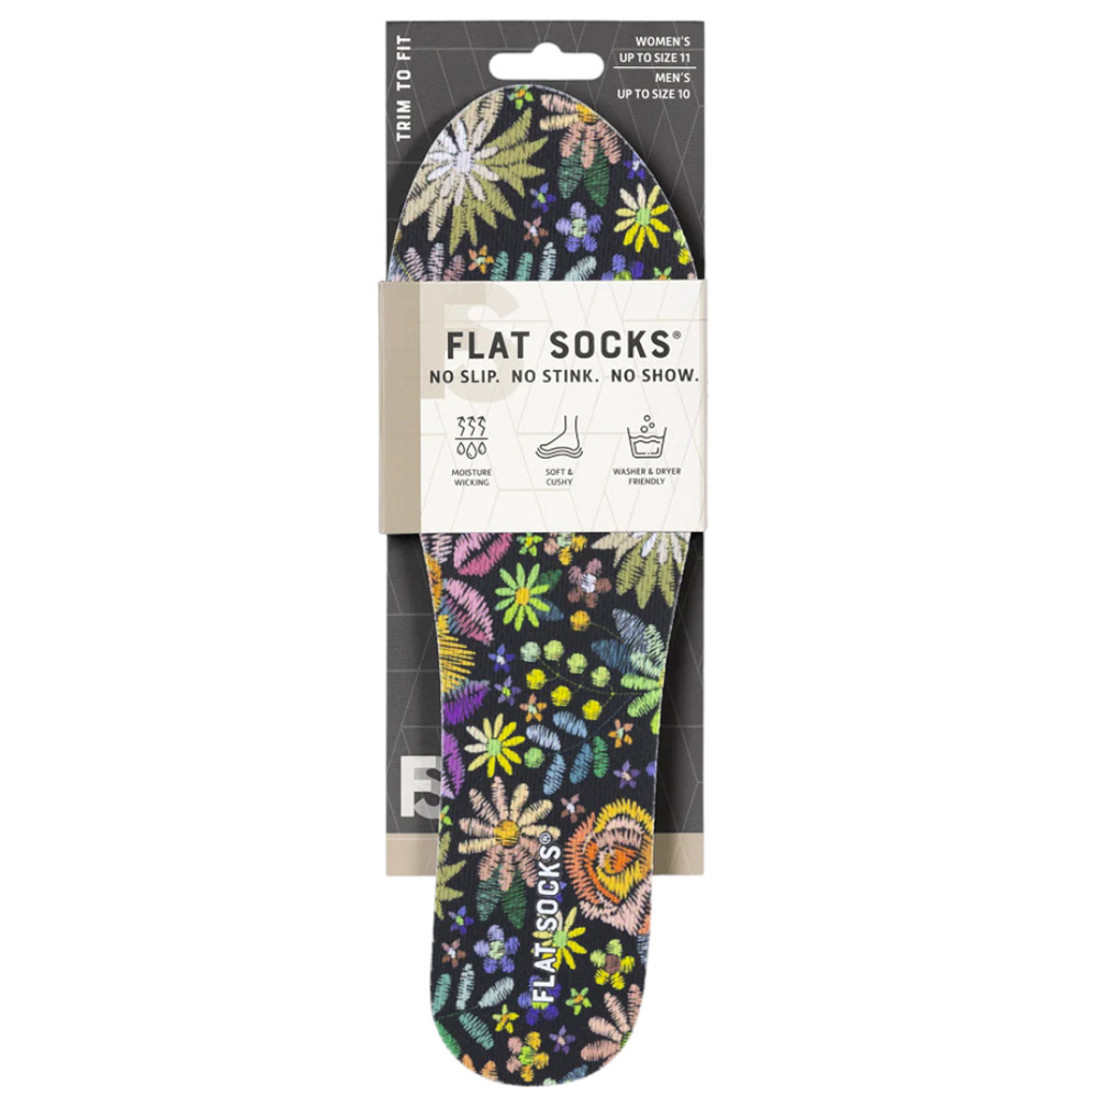 Flat Socks - Floral Embroidery - No Show Socks